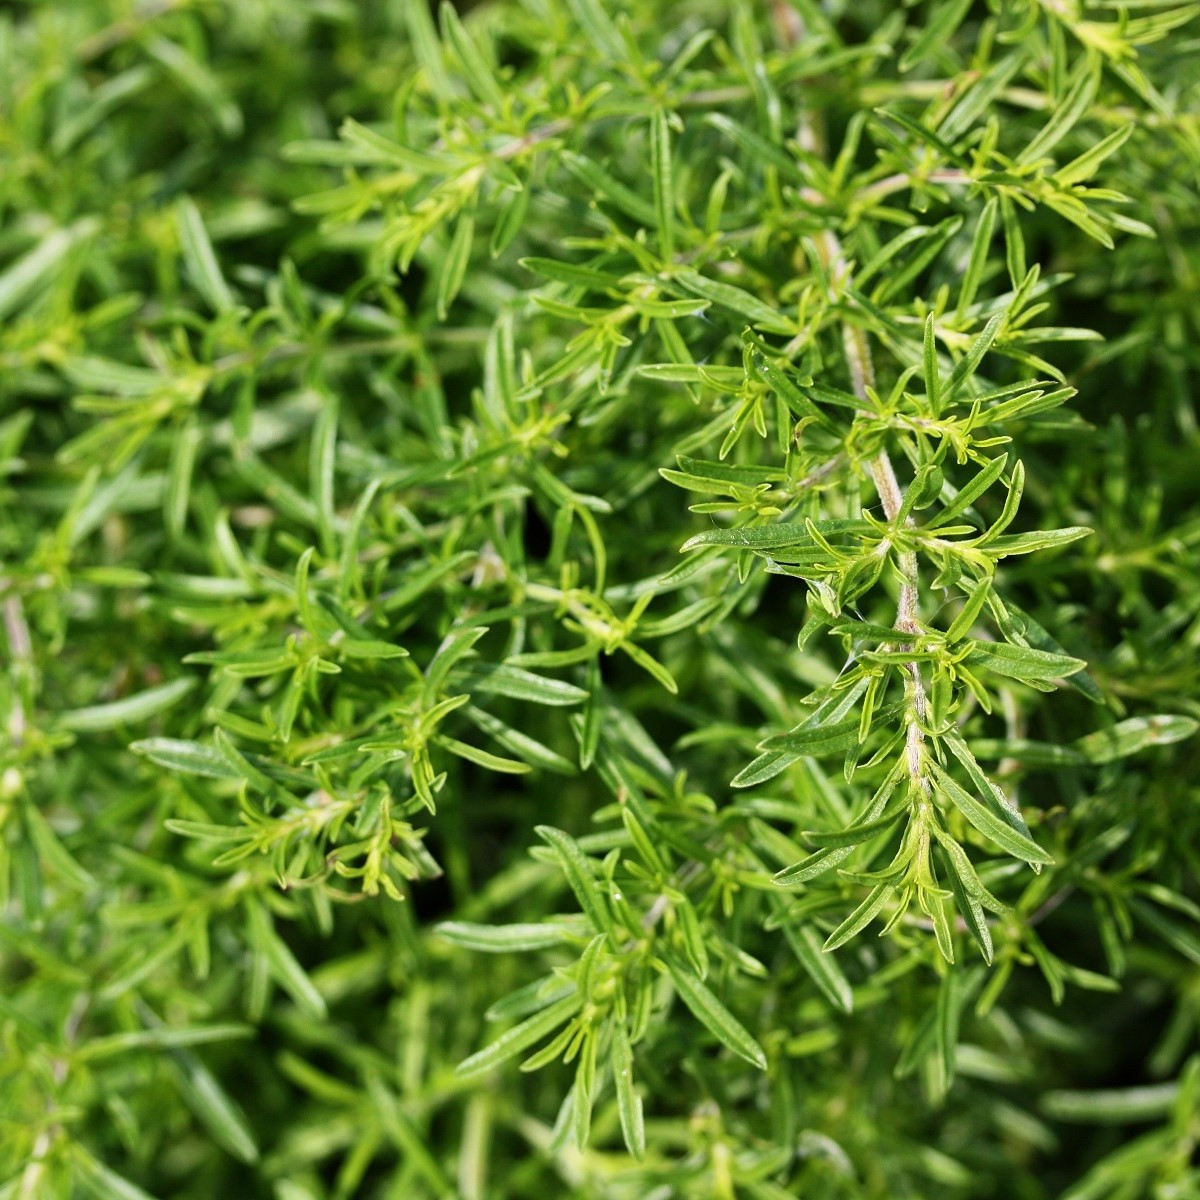 BIO Saturejka zahradní - Satureja hortensis - bio semena saturejky - 1 g